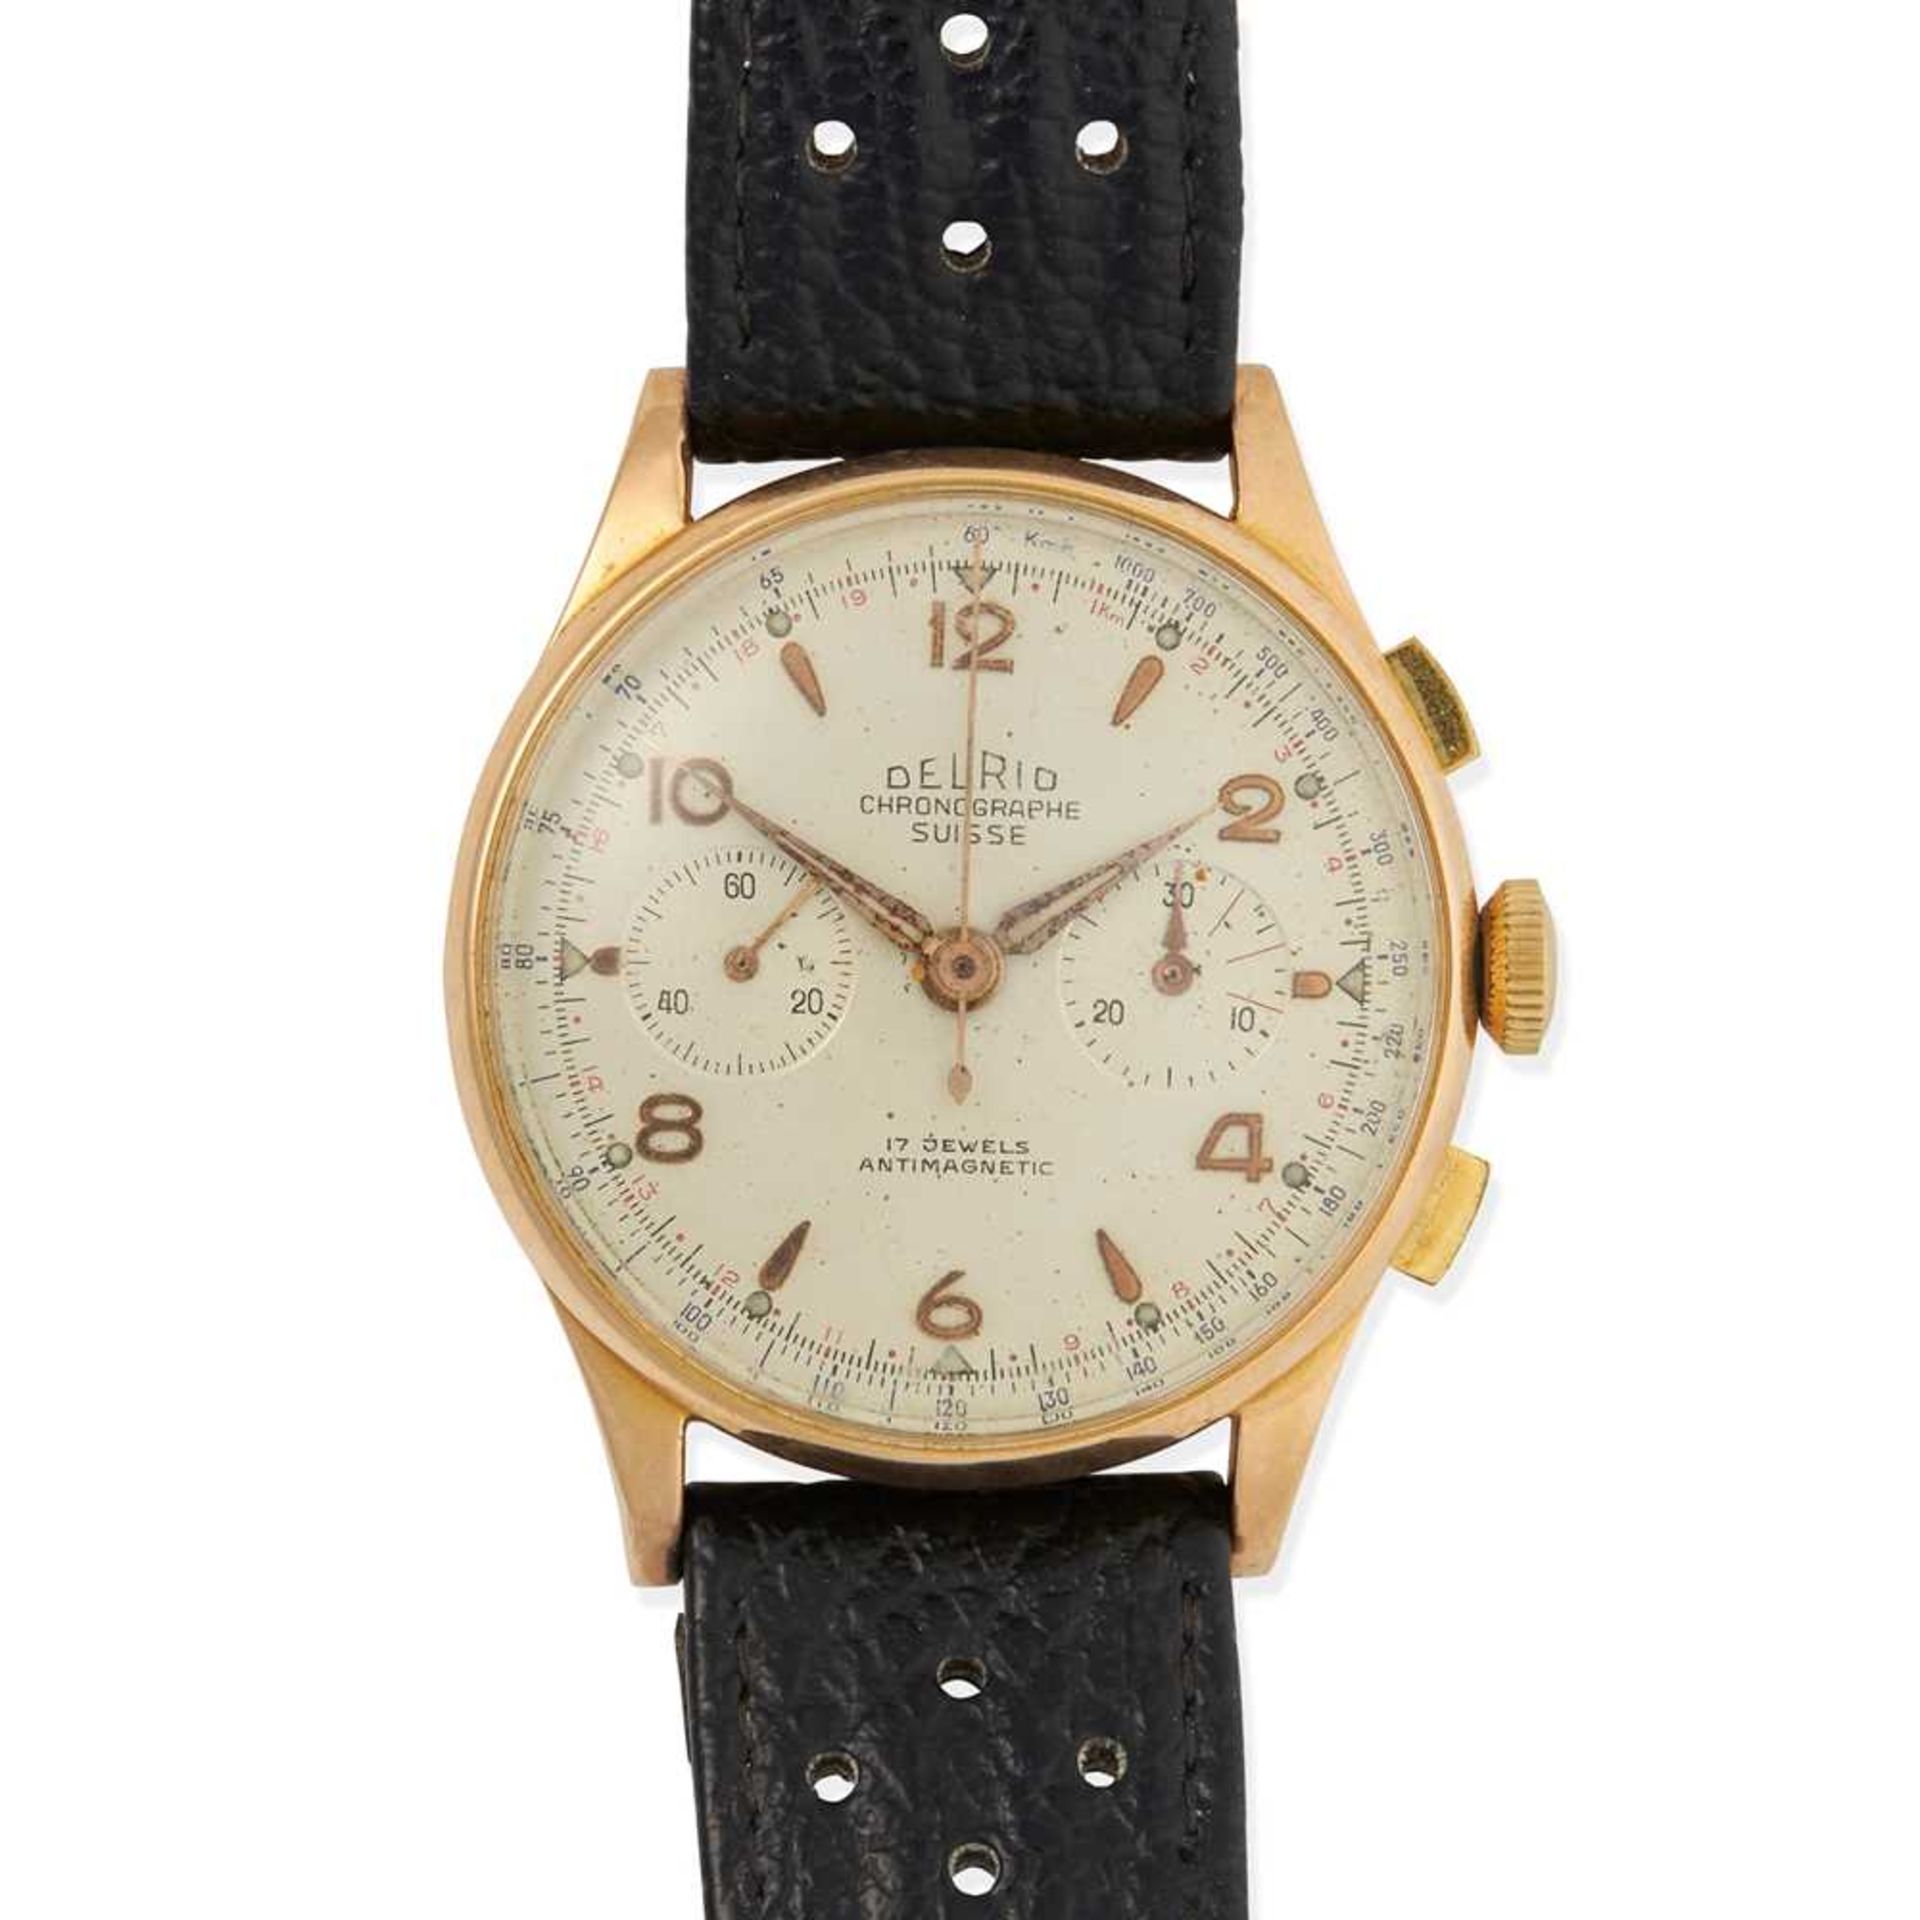 Delrio Chronographe Suisse: a gentleman's gold wrist watch